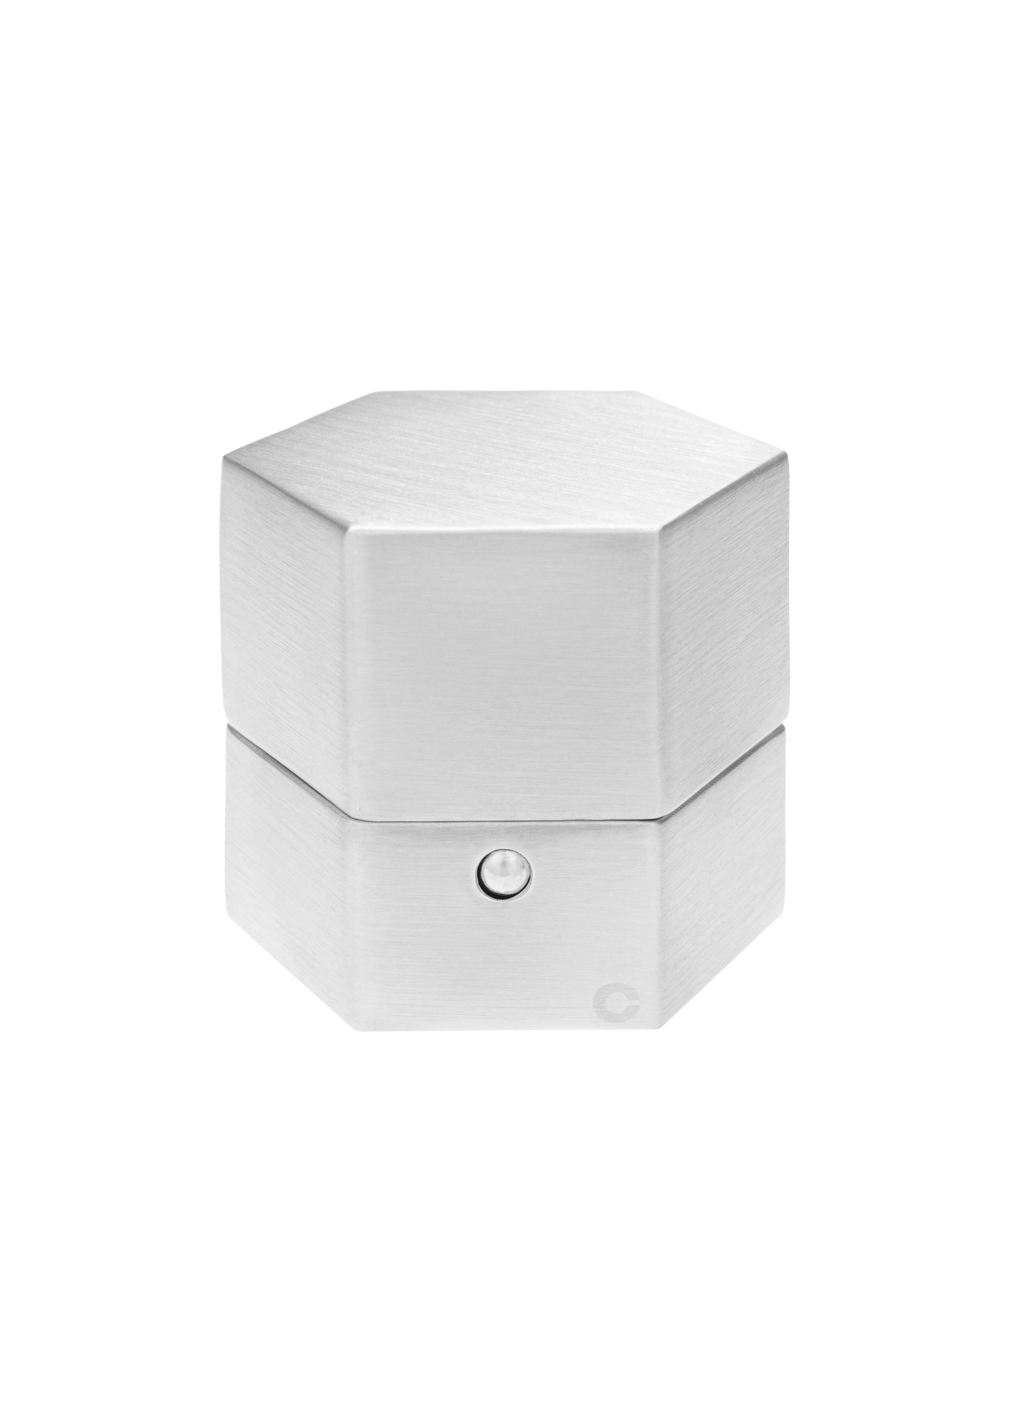 la caja de esterlina hexagonal